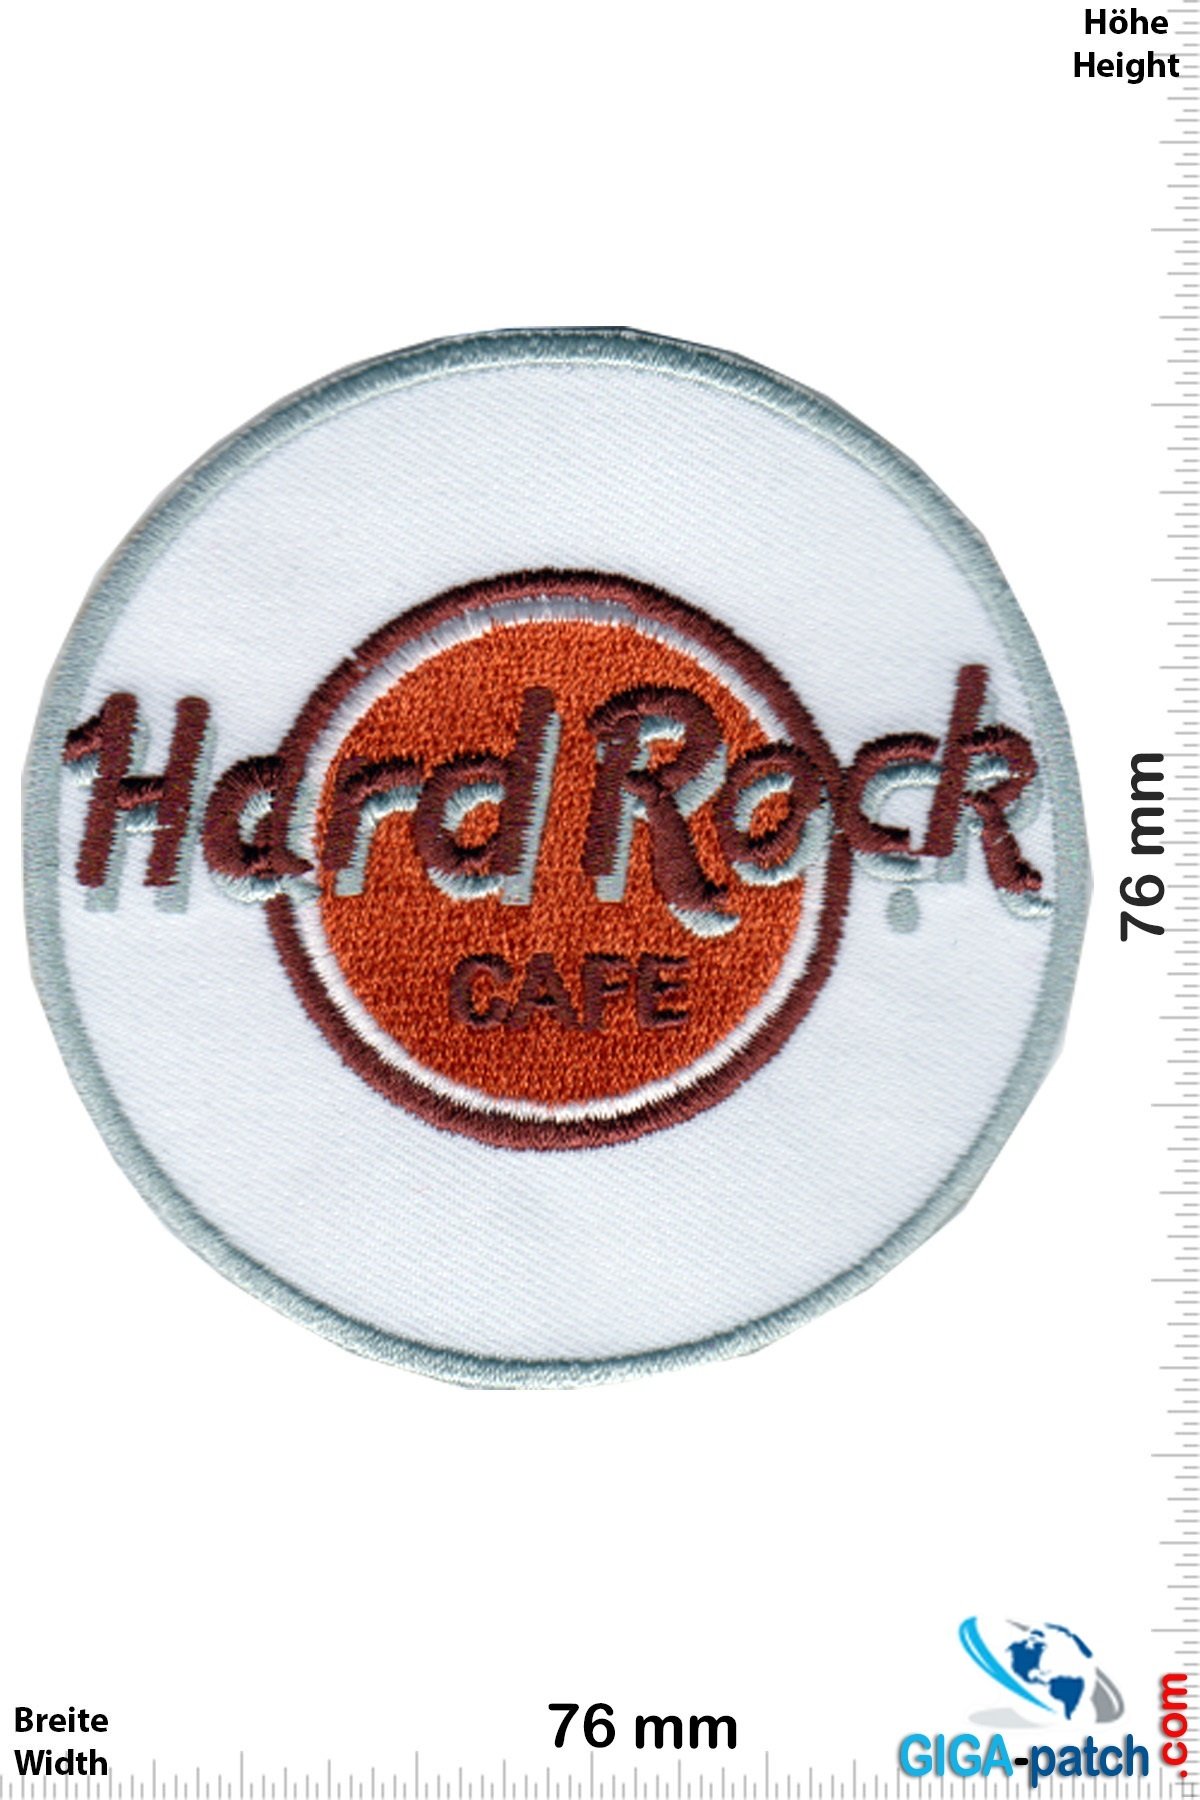 Hard Rock Cafe Standorte Weltweit